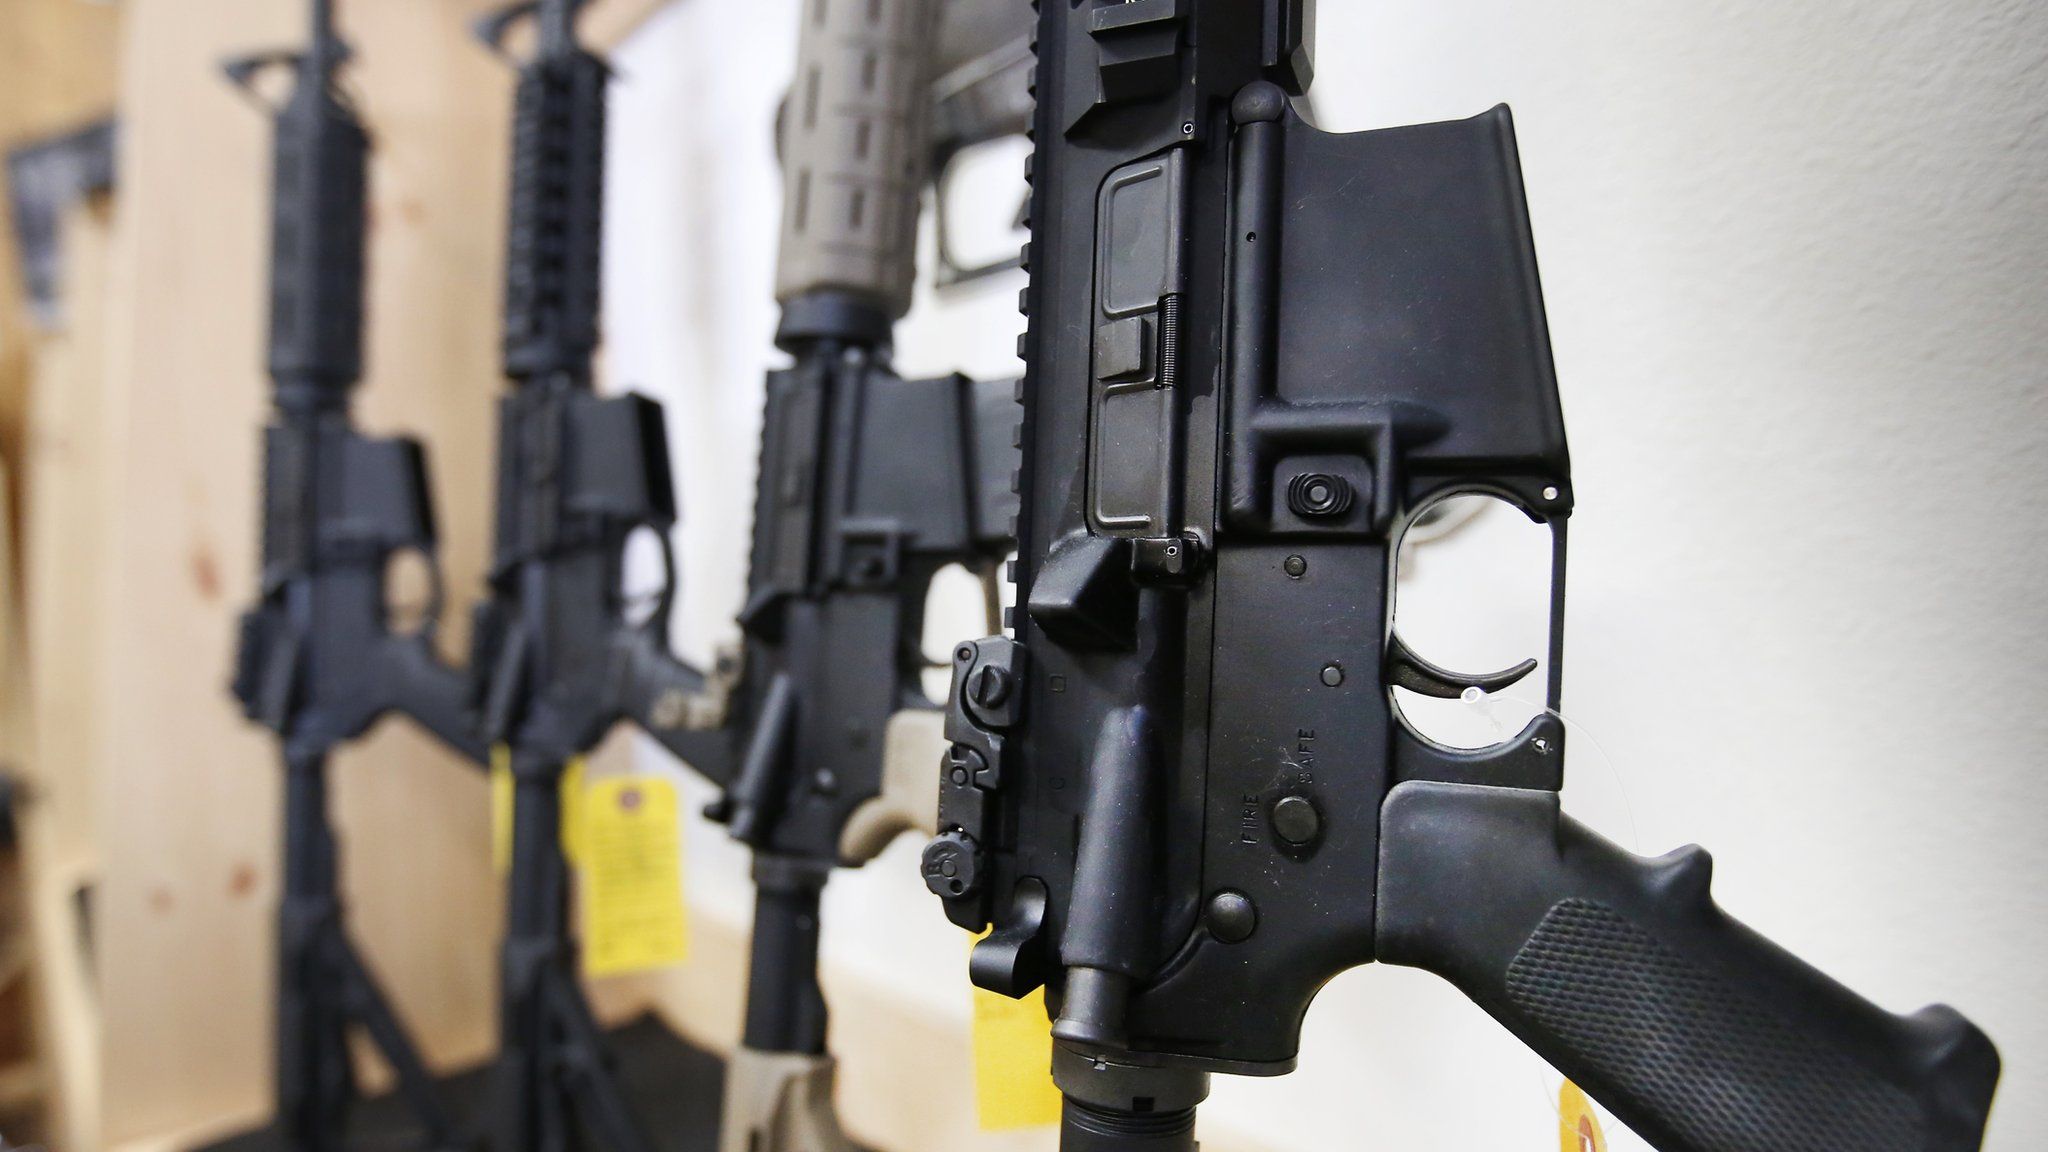 File photo shows AR-15 semi-automatic rifles for sale in Springville, Utah (17 June 2016)